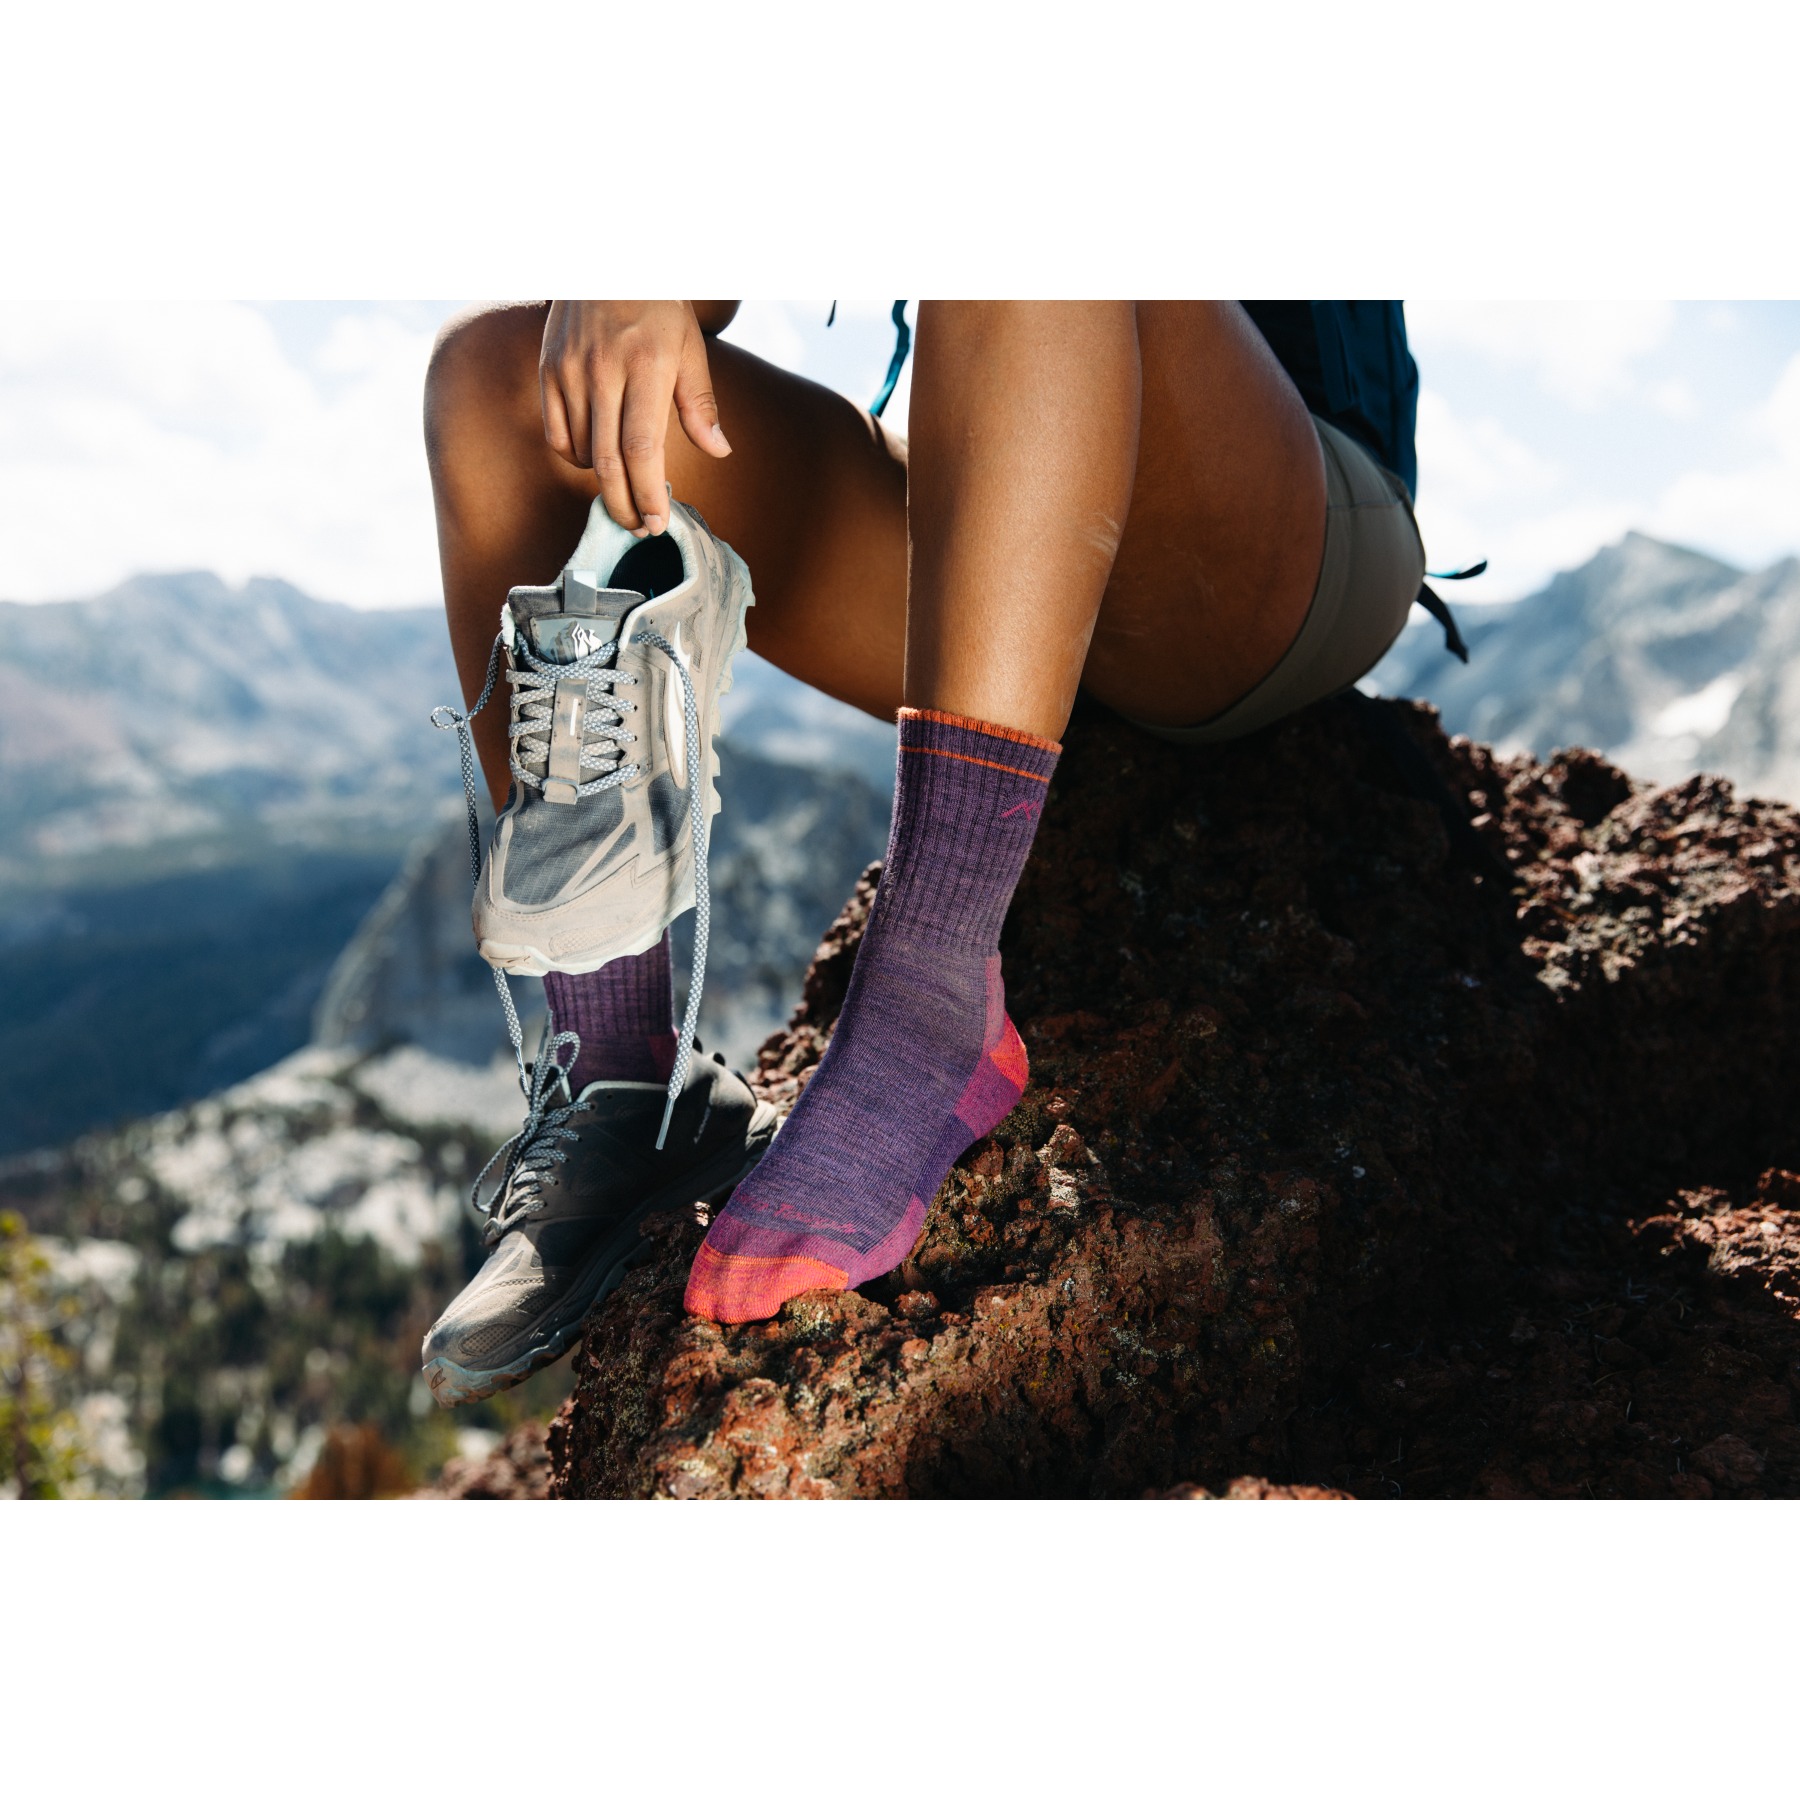 https://images.bike24.com/i/mb/d7/34/1b/darn-tough-hiker-boot-midweight-hiking-socks-women-plum-heather-3-1569230.jpg